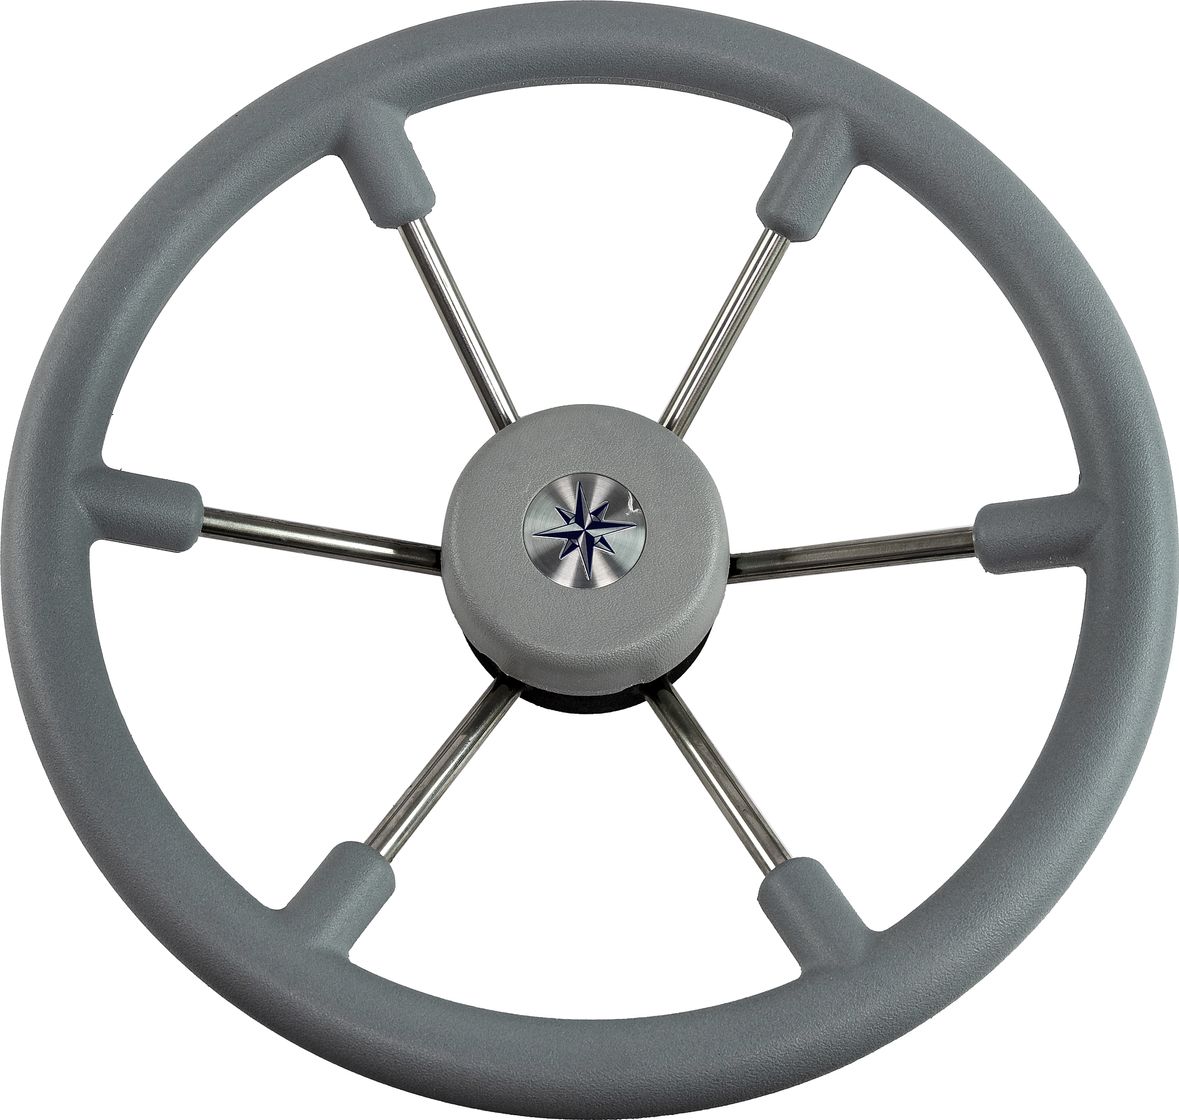 Рулевое колесо LEADER TANEGUM серый обод серебряные спицы д. 360 мм VN7360-03 рулевое колесо leader plast обод серебряные спицы д 330 мм vn8330 01